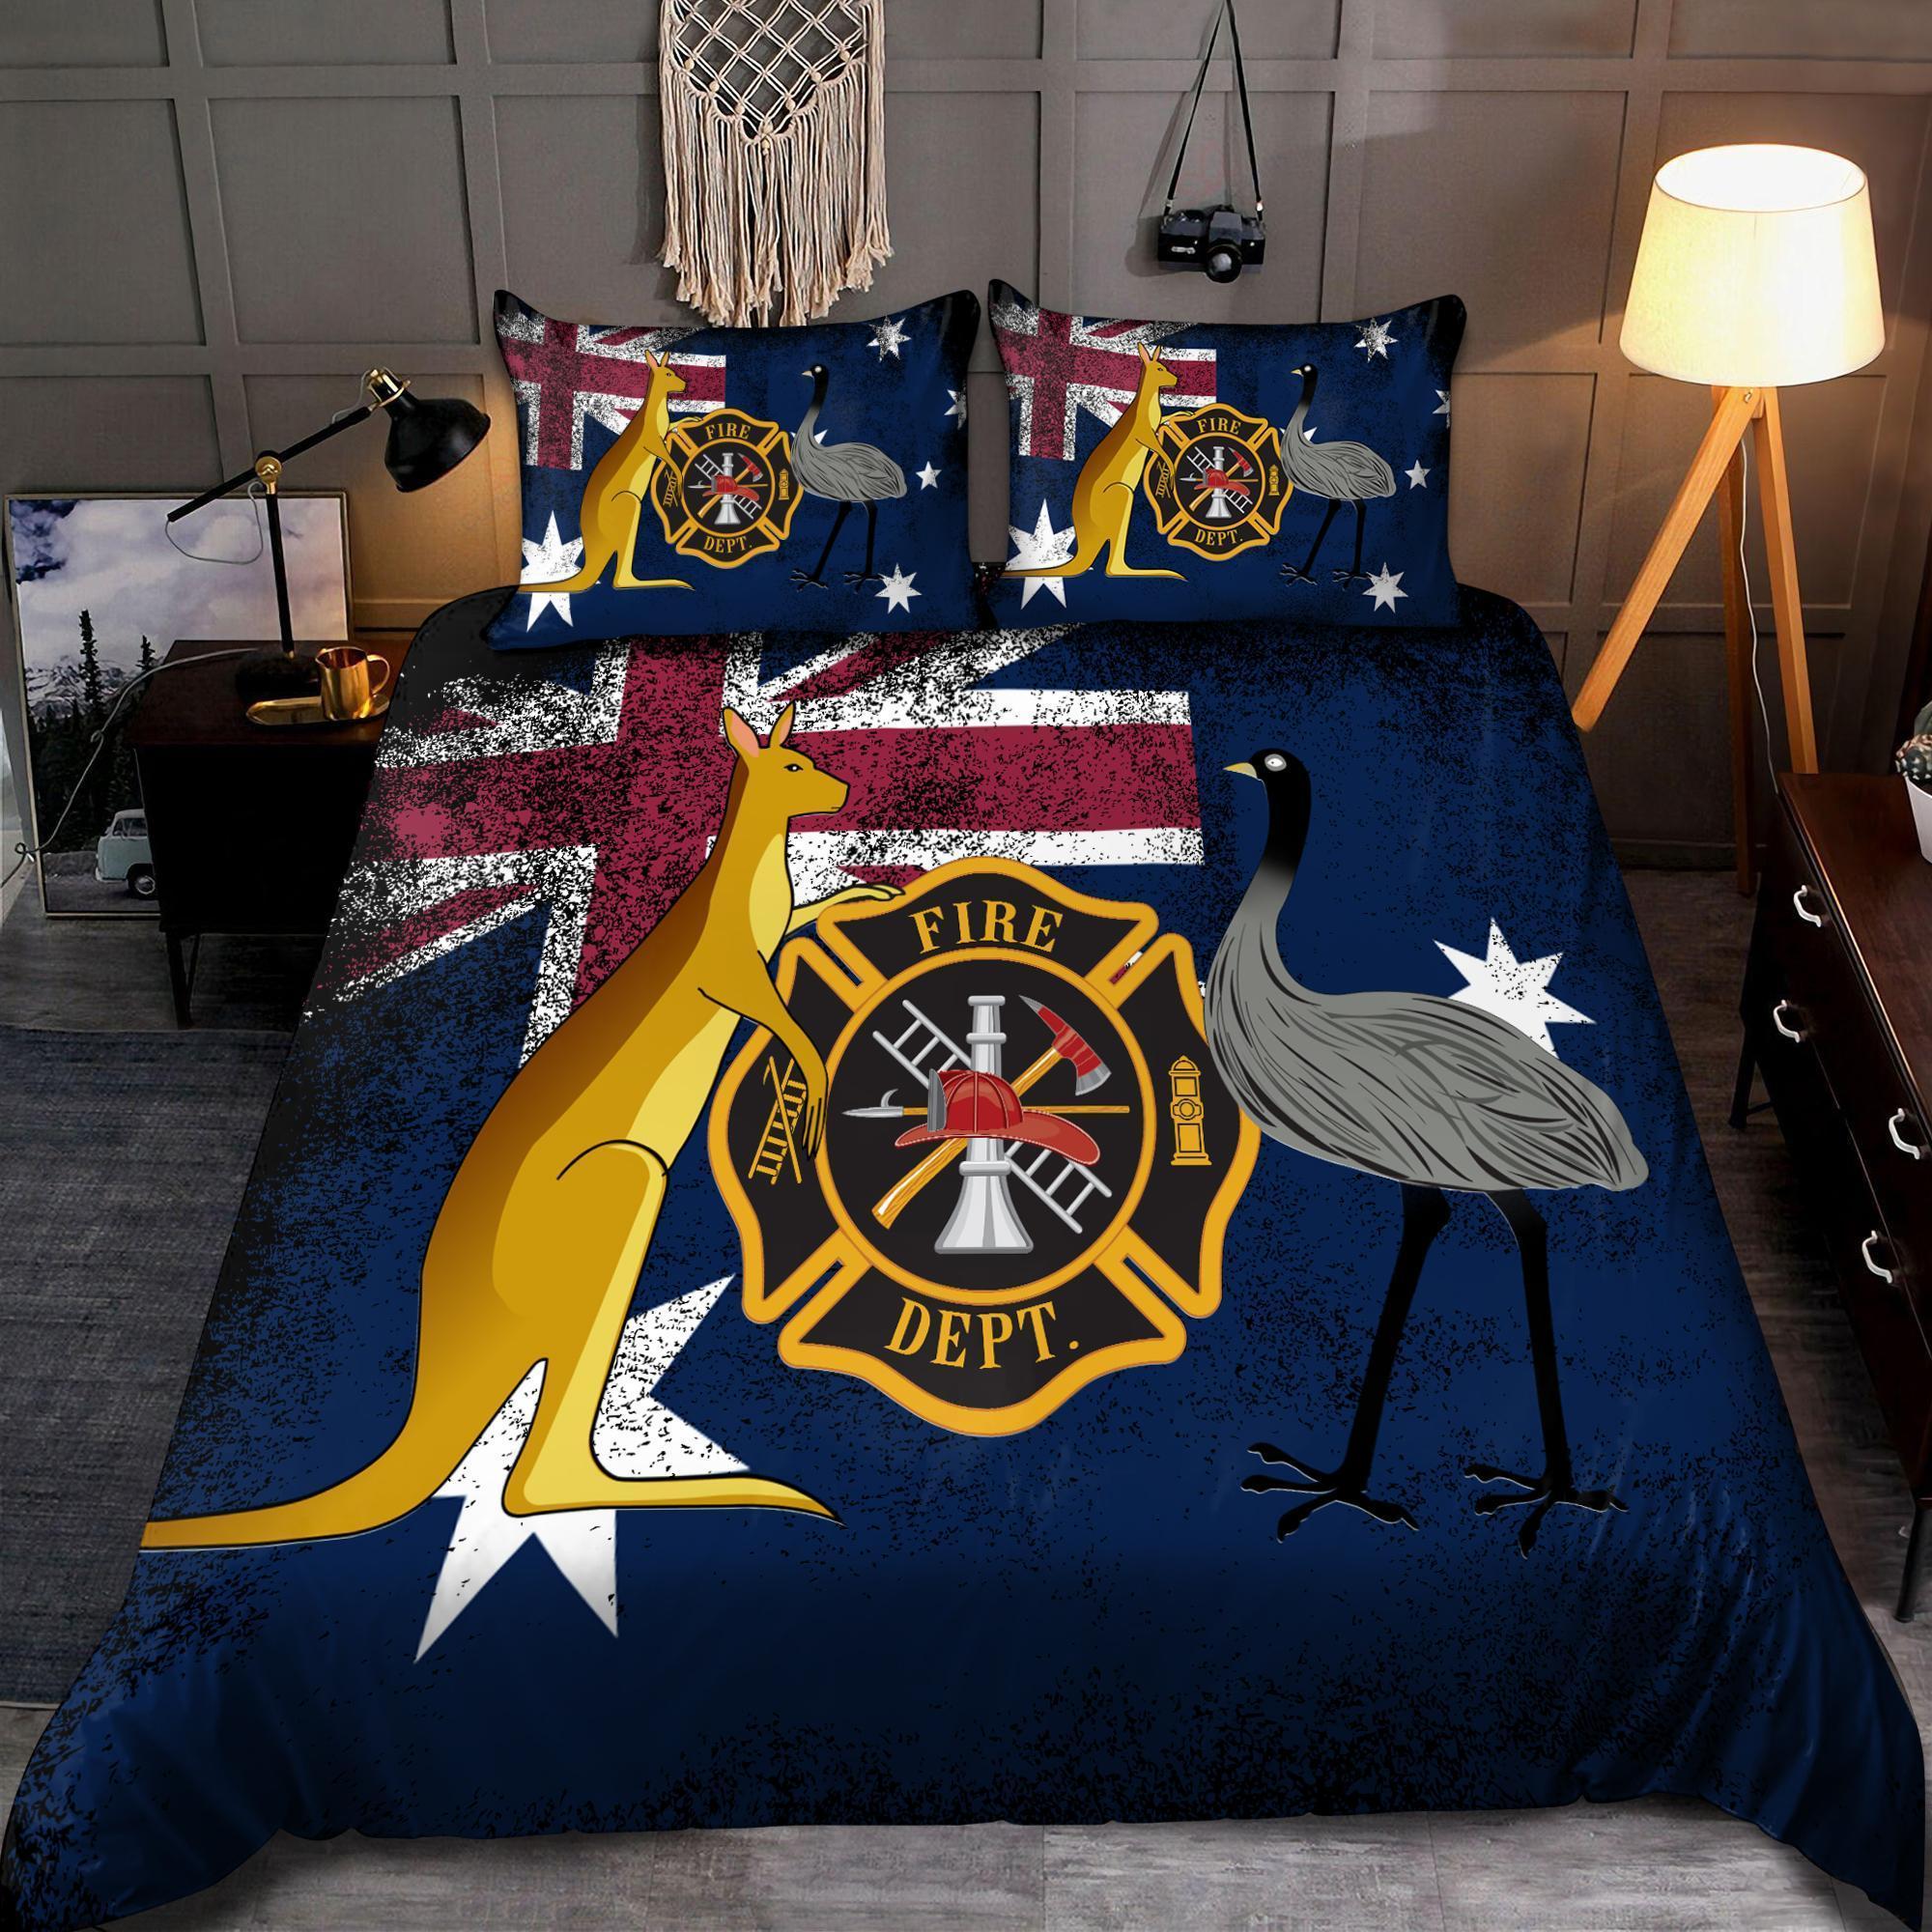 Proud Australian Firefighter Bedding Set